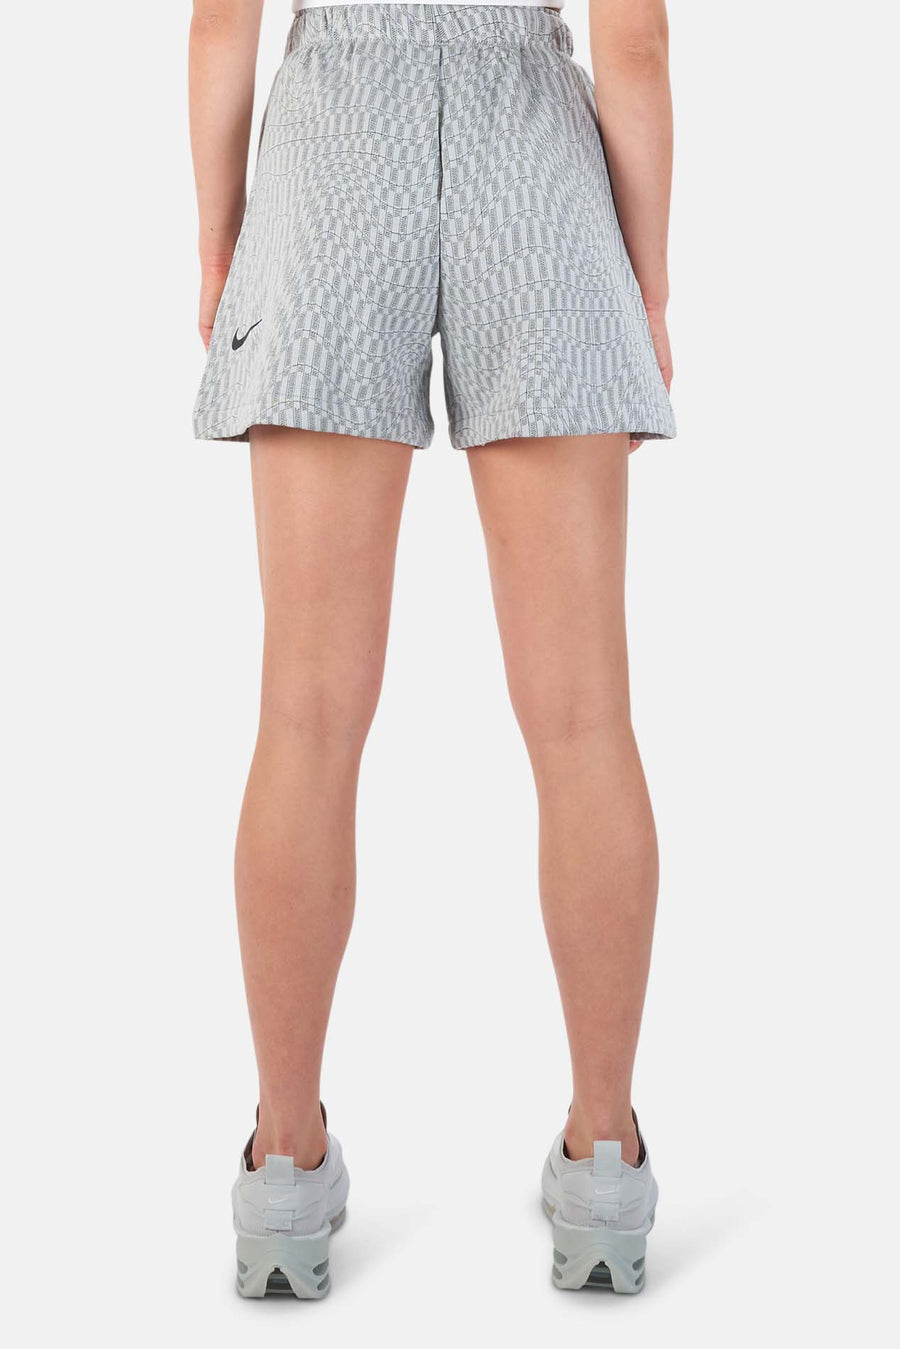 Nike Tech Pack Geometric Knit Shorts - blueandcream